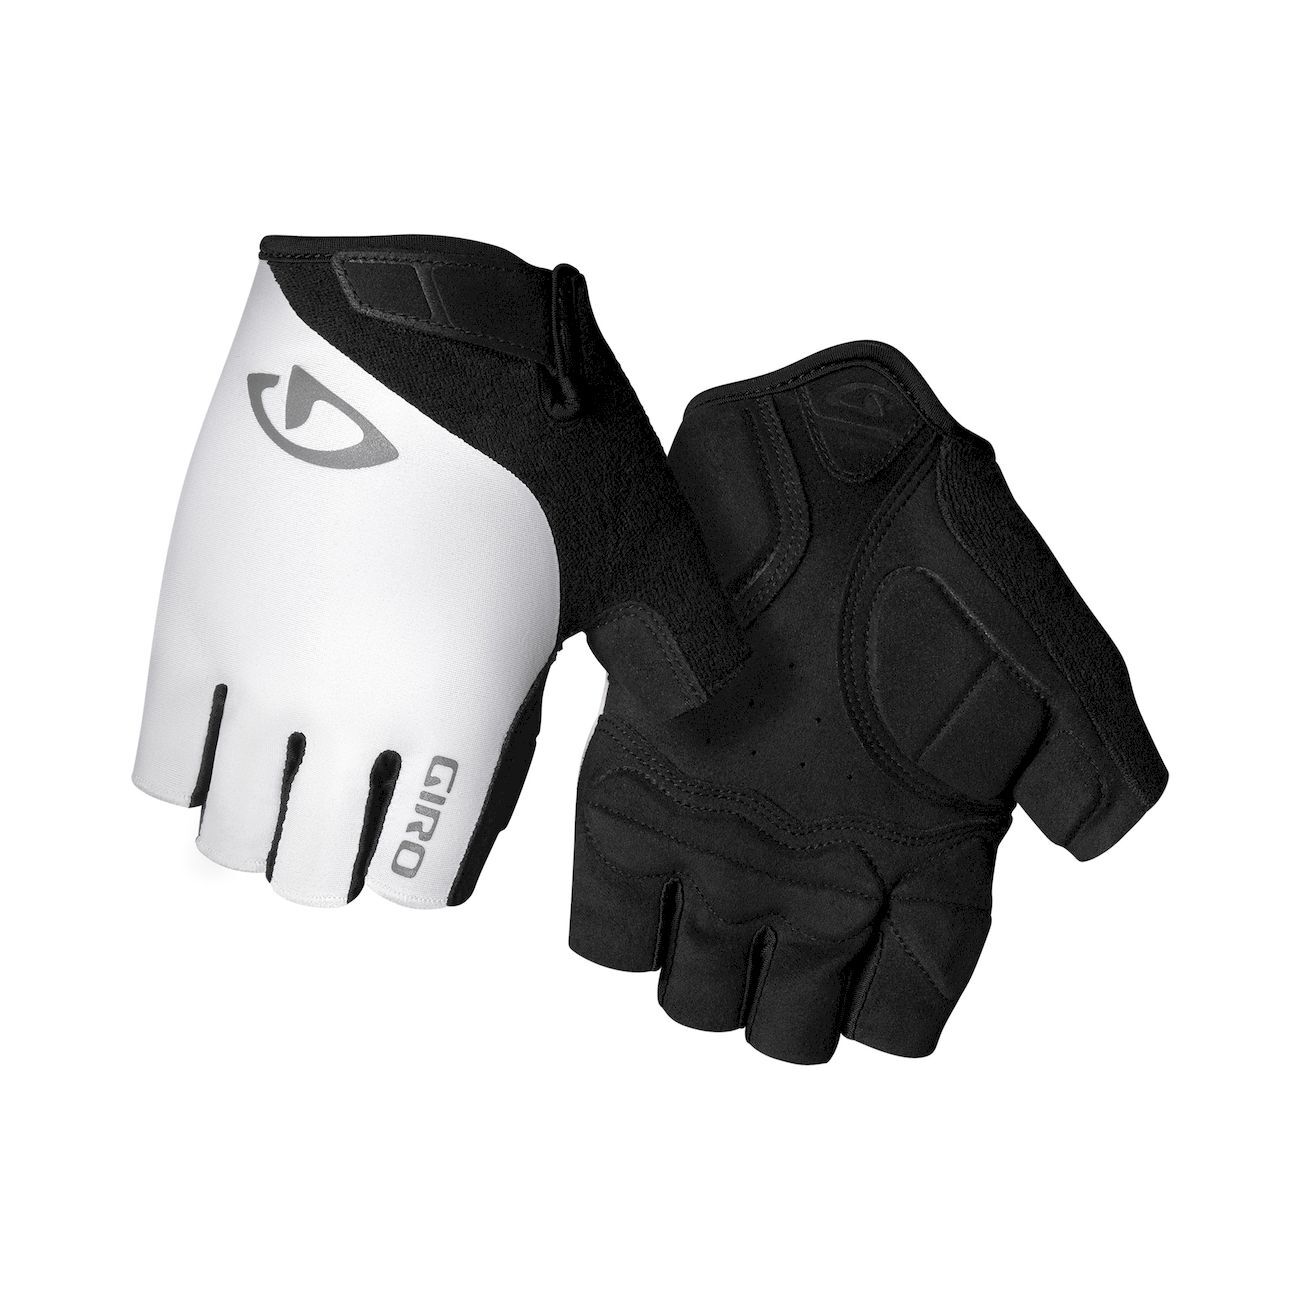 Giro Jag - Cycling gloves - Men's